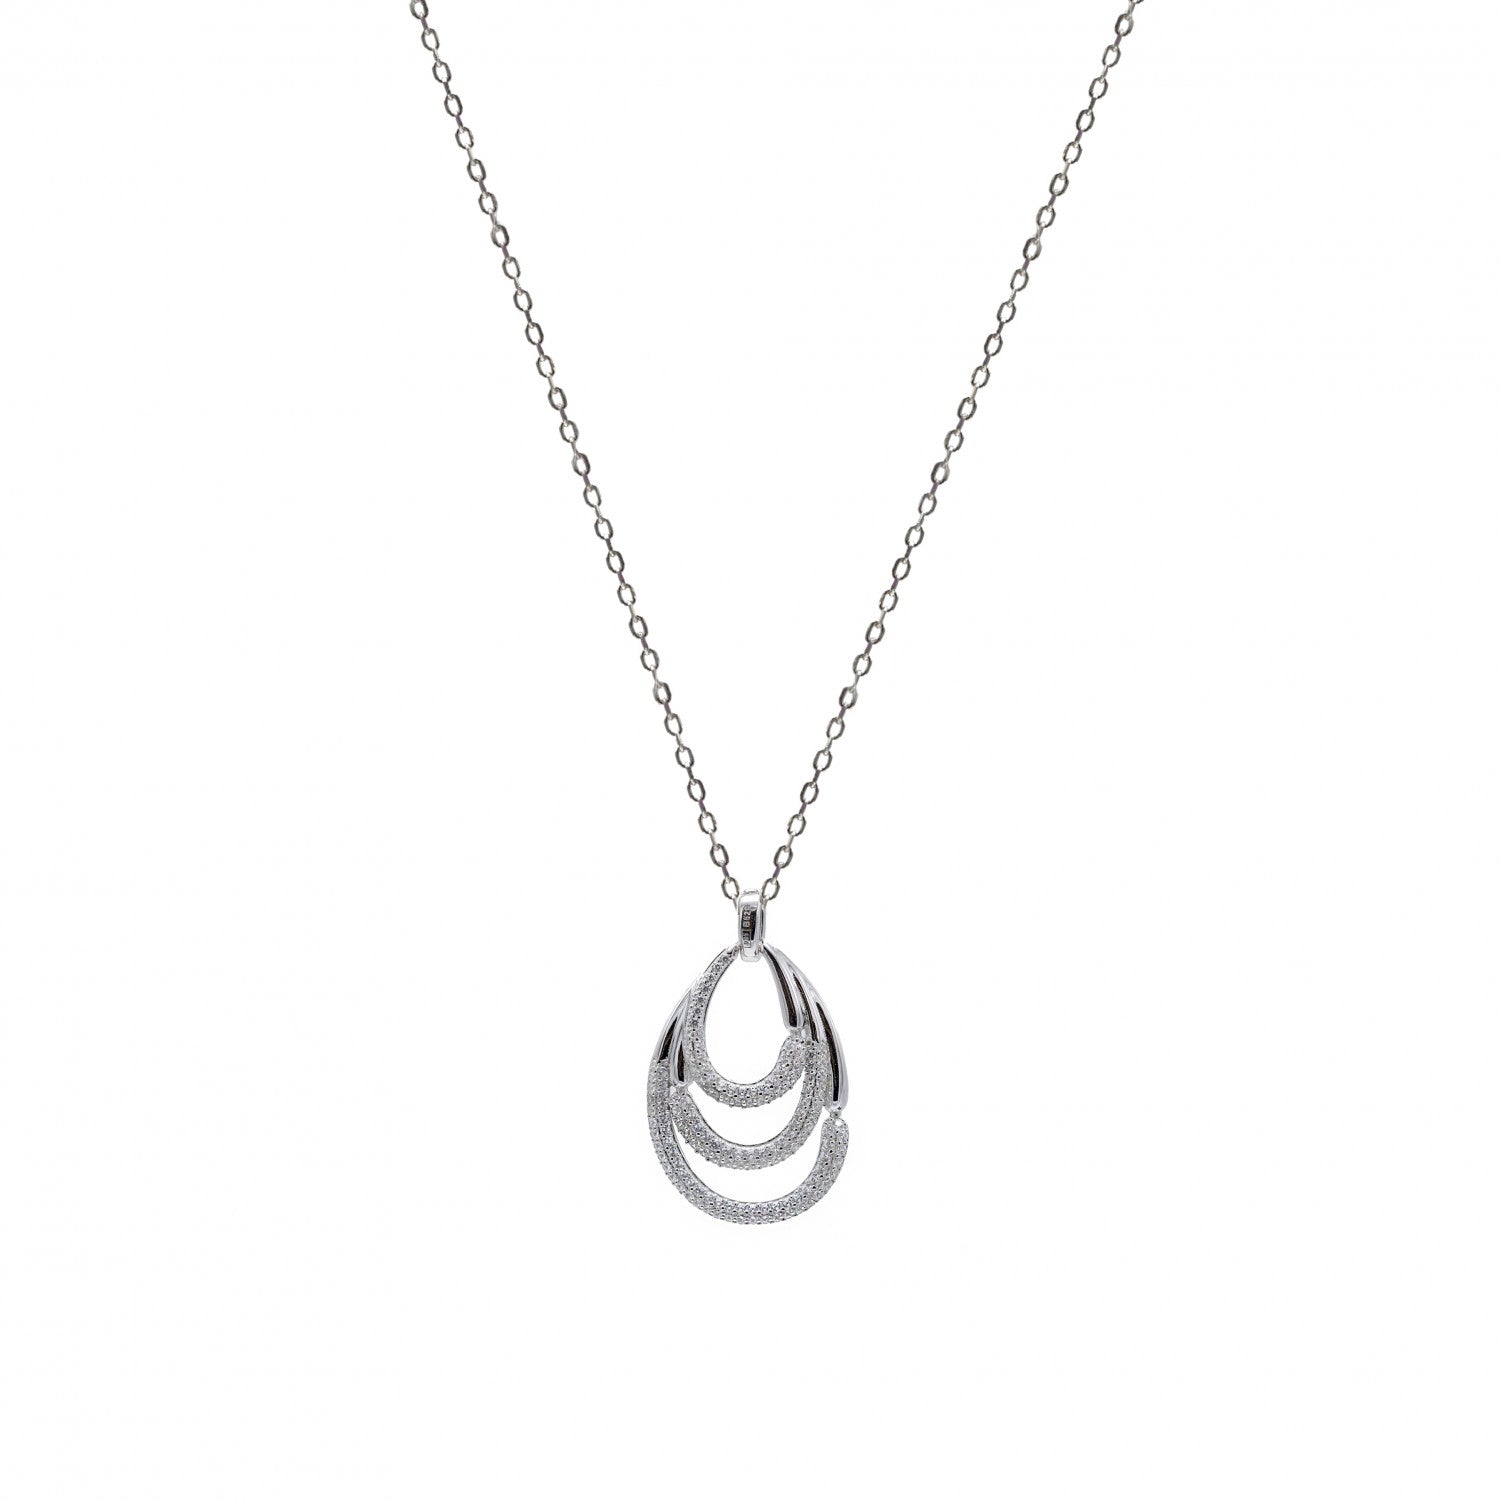 Shiny pendant with three linked ovals design